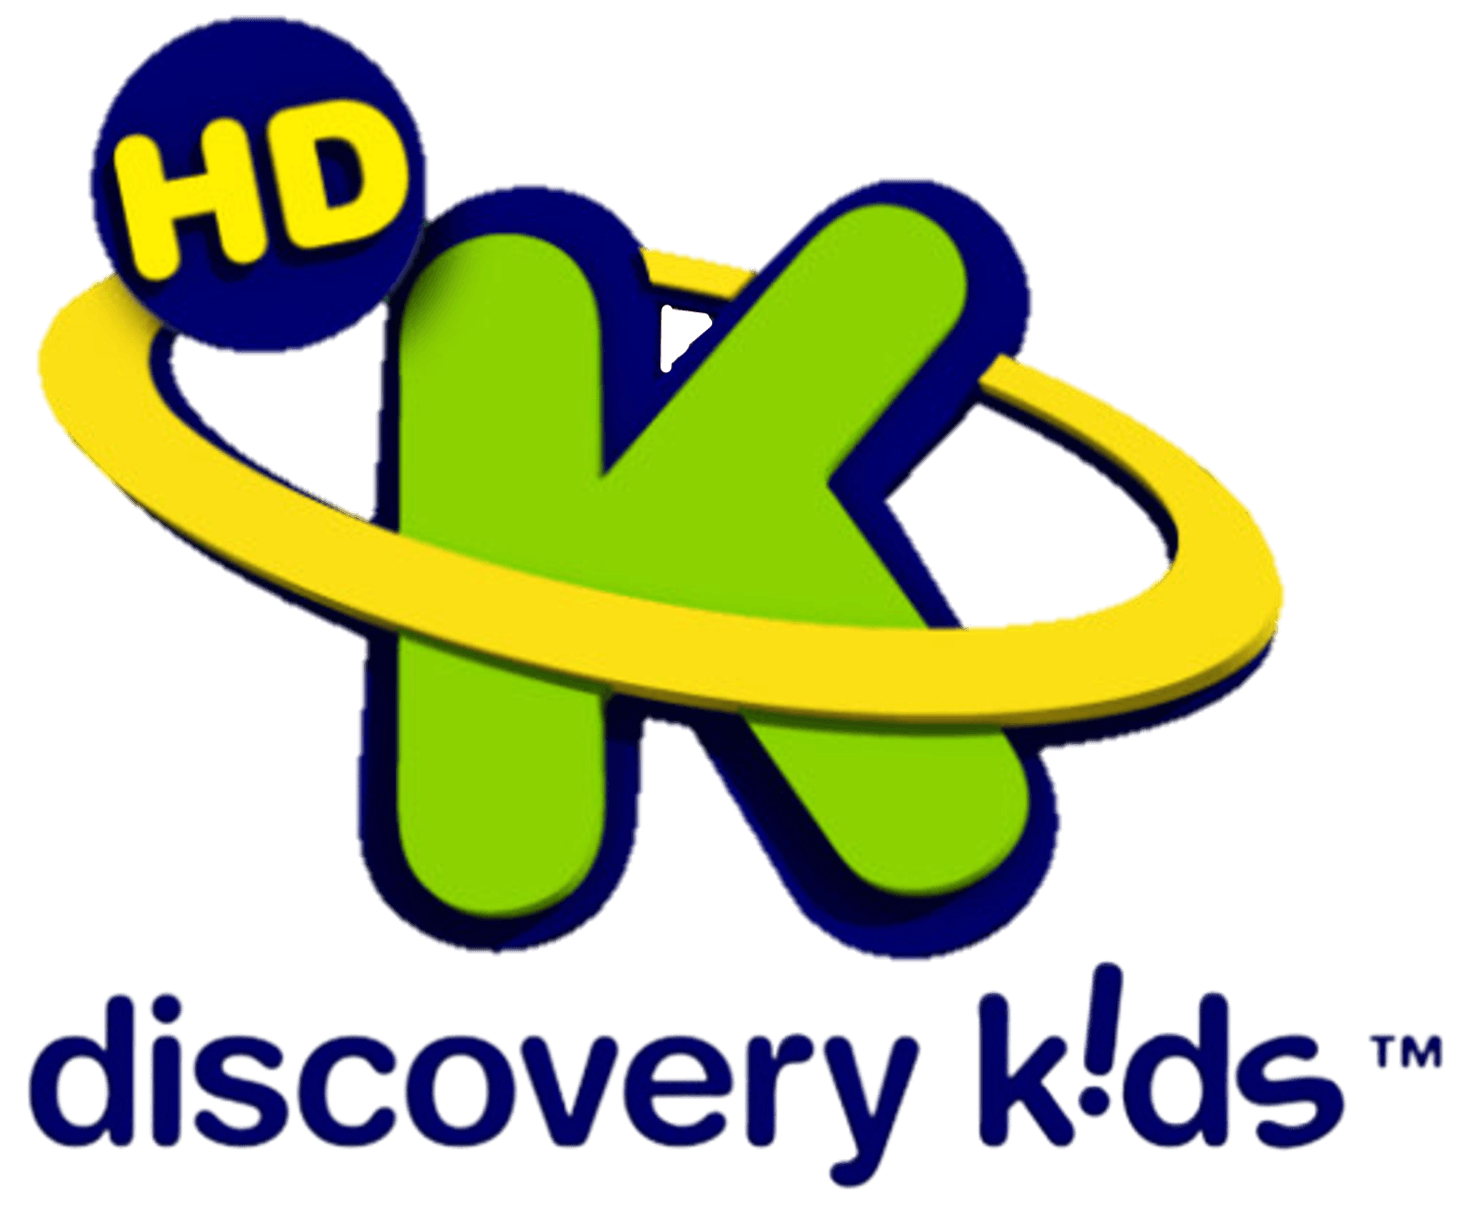 Discovery Kids Logo - Discovery Kids HD 2013 2016 : trgrt ...